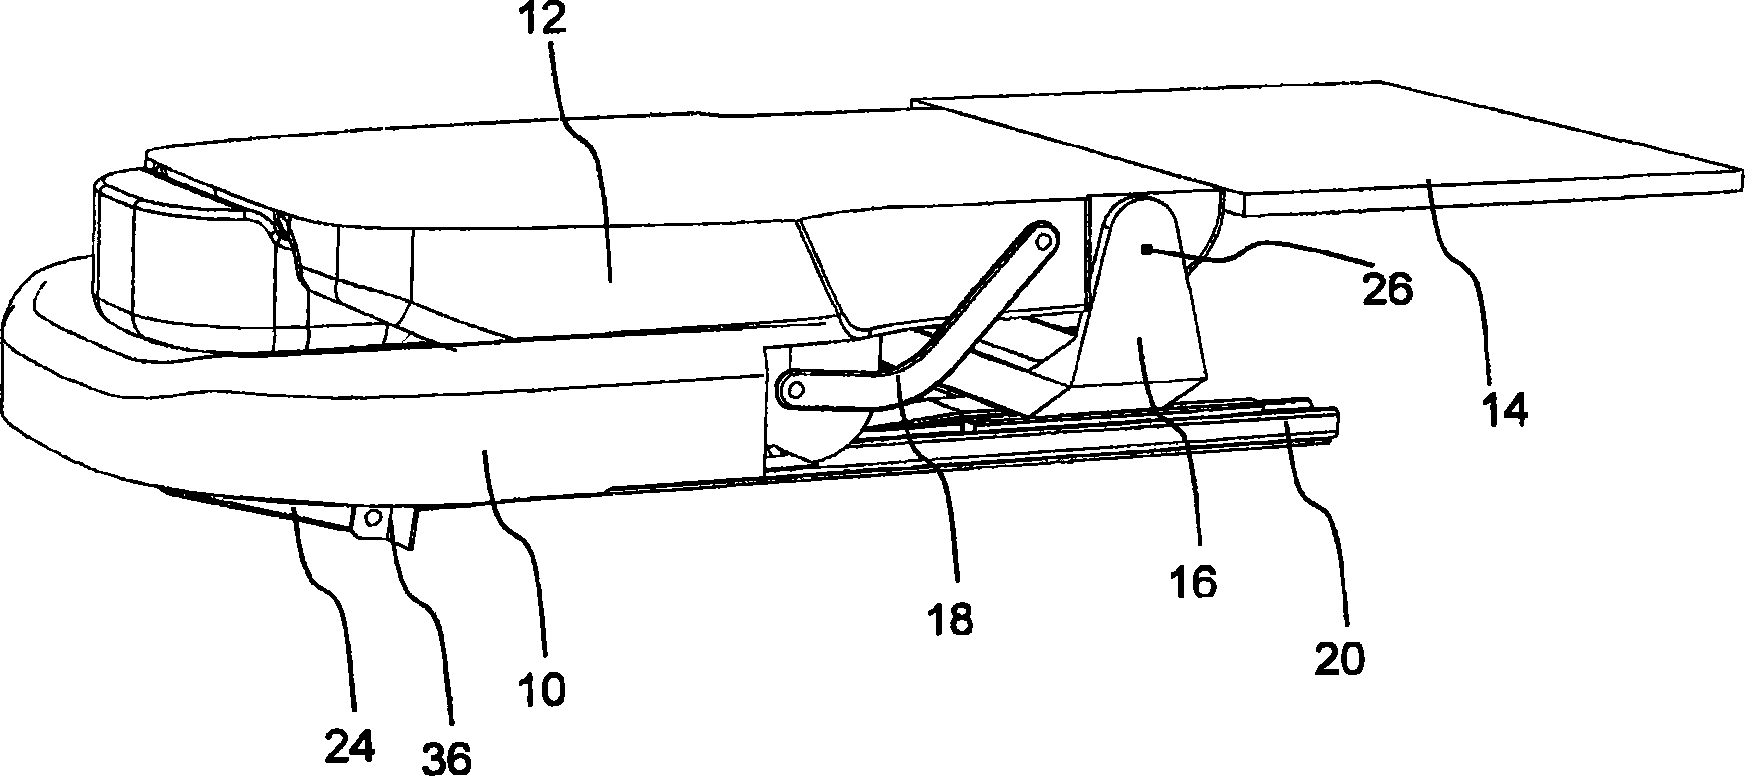 Fold-down vehicle seat